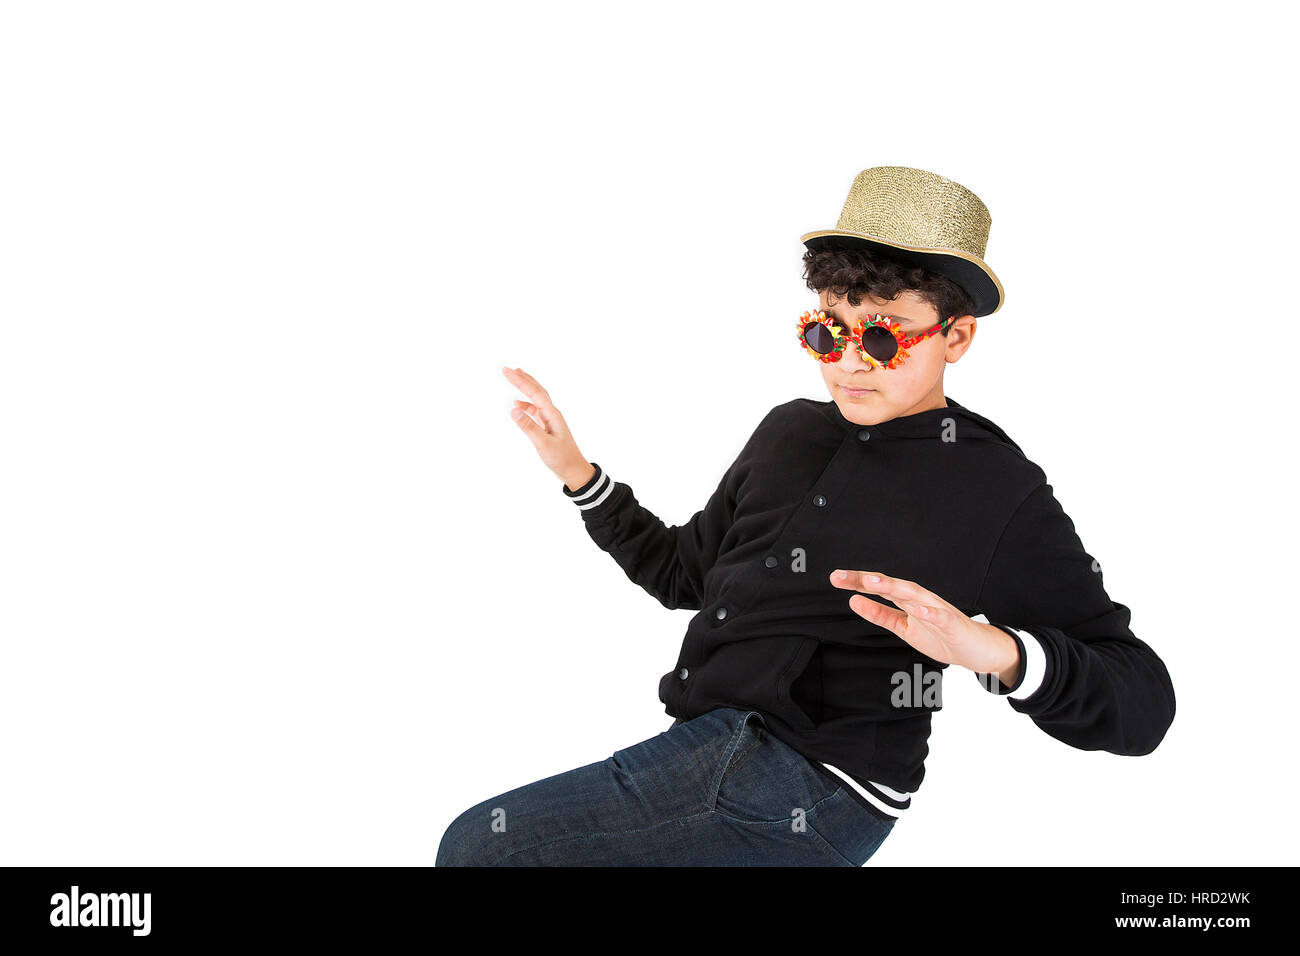 Boy wearing sunglasses and hat. Stock Photo